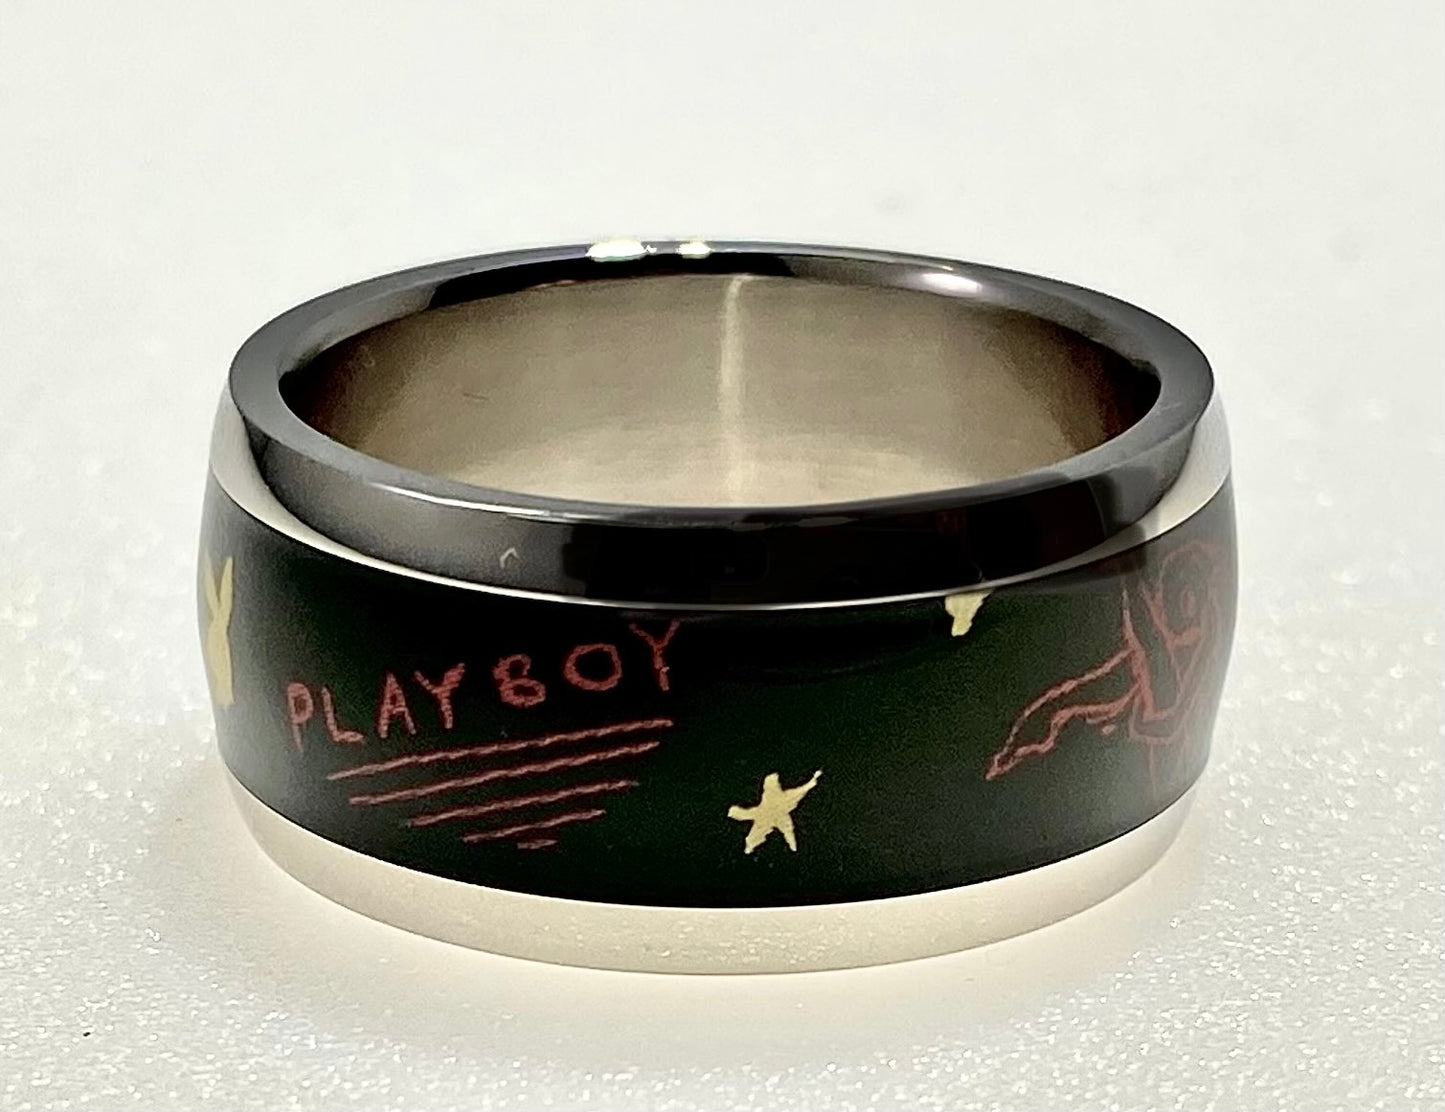 Playboy Band Ring